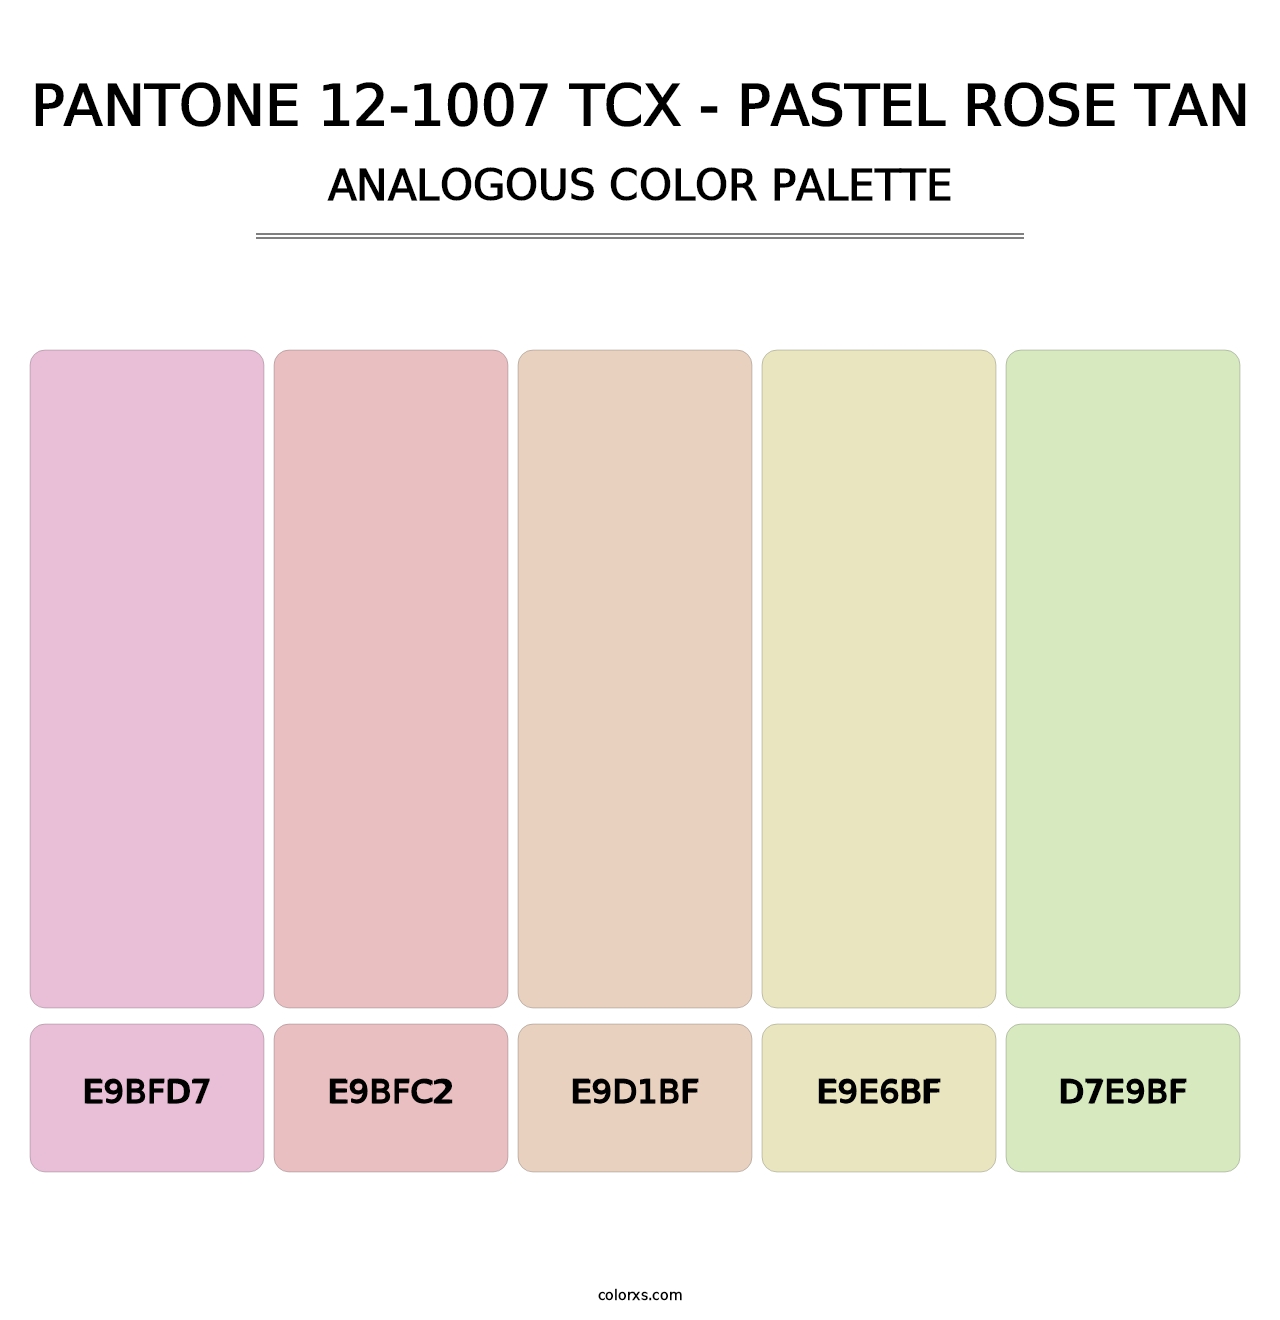 PANTONE 12-1007 TCX - Pastel Rose Tan - Analogous Color Palette